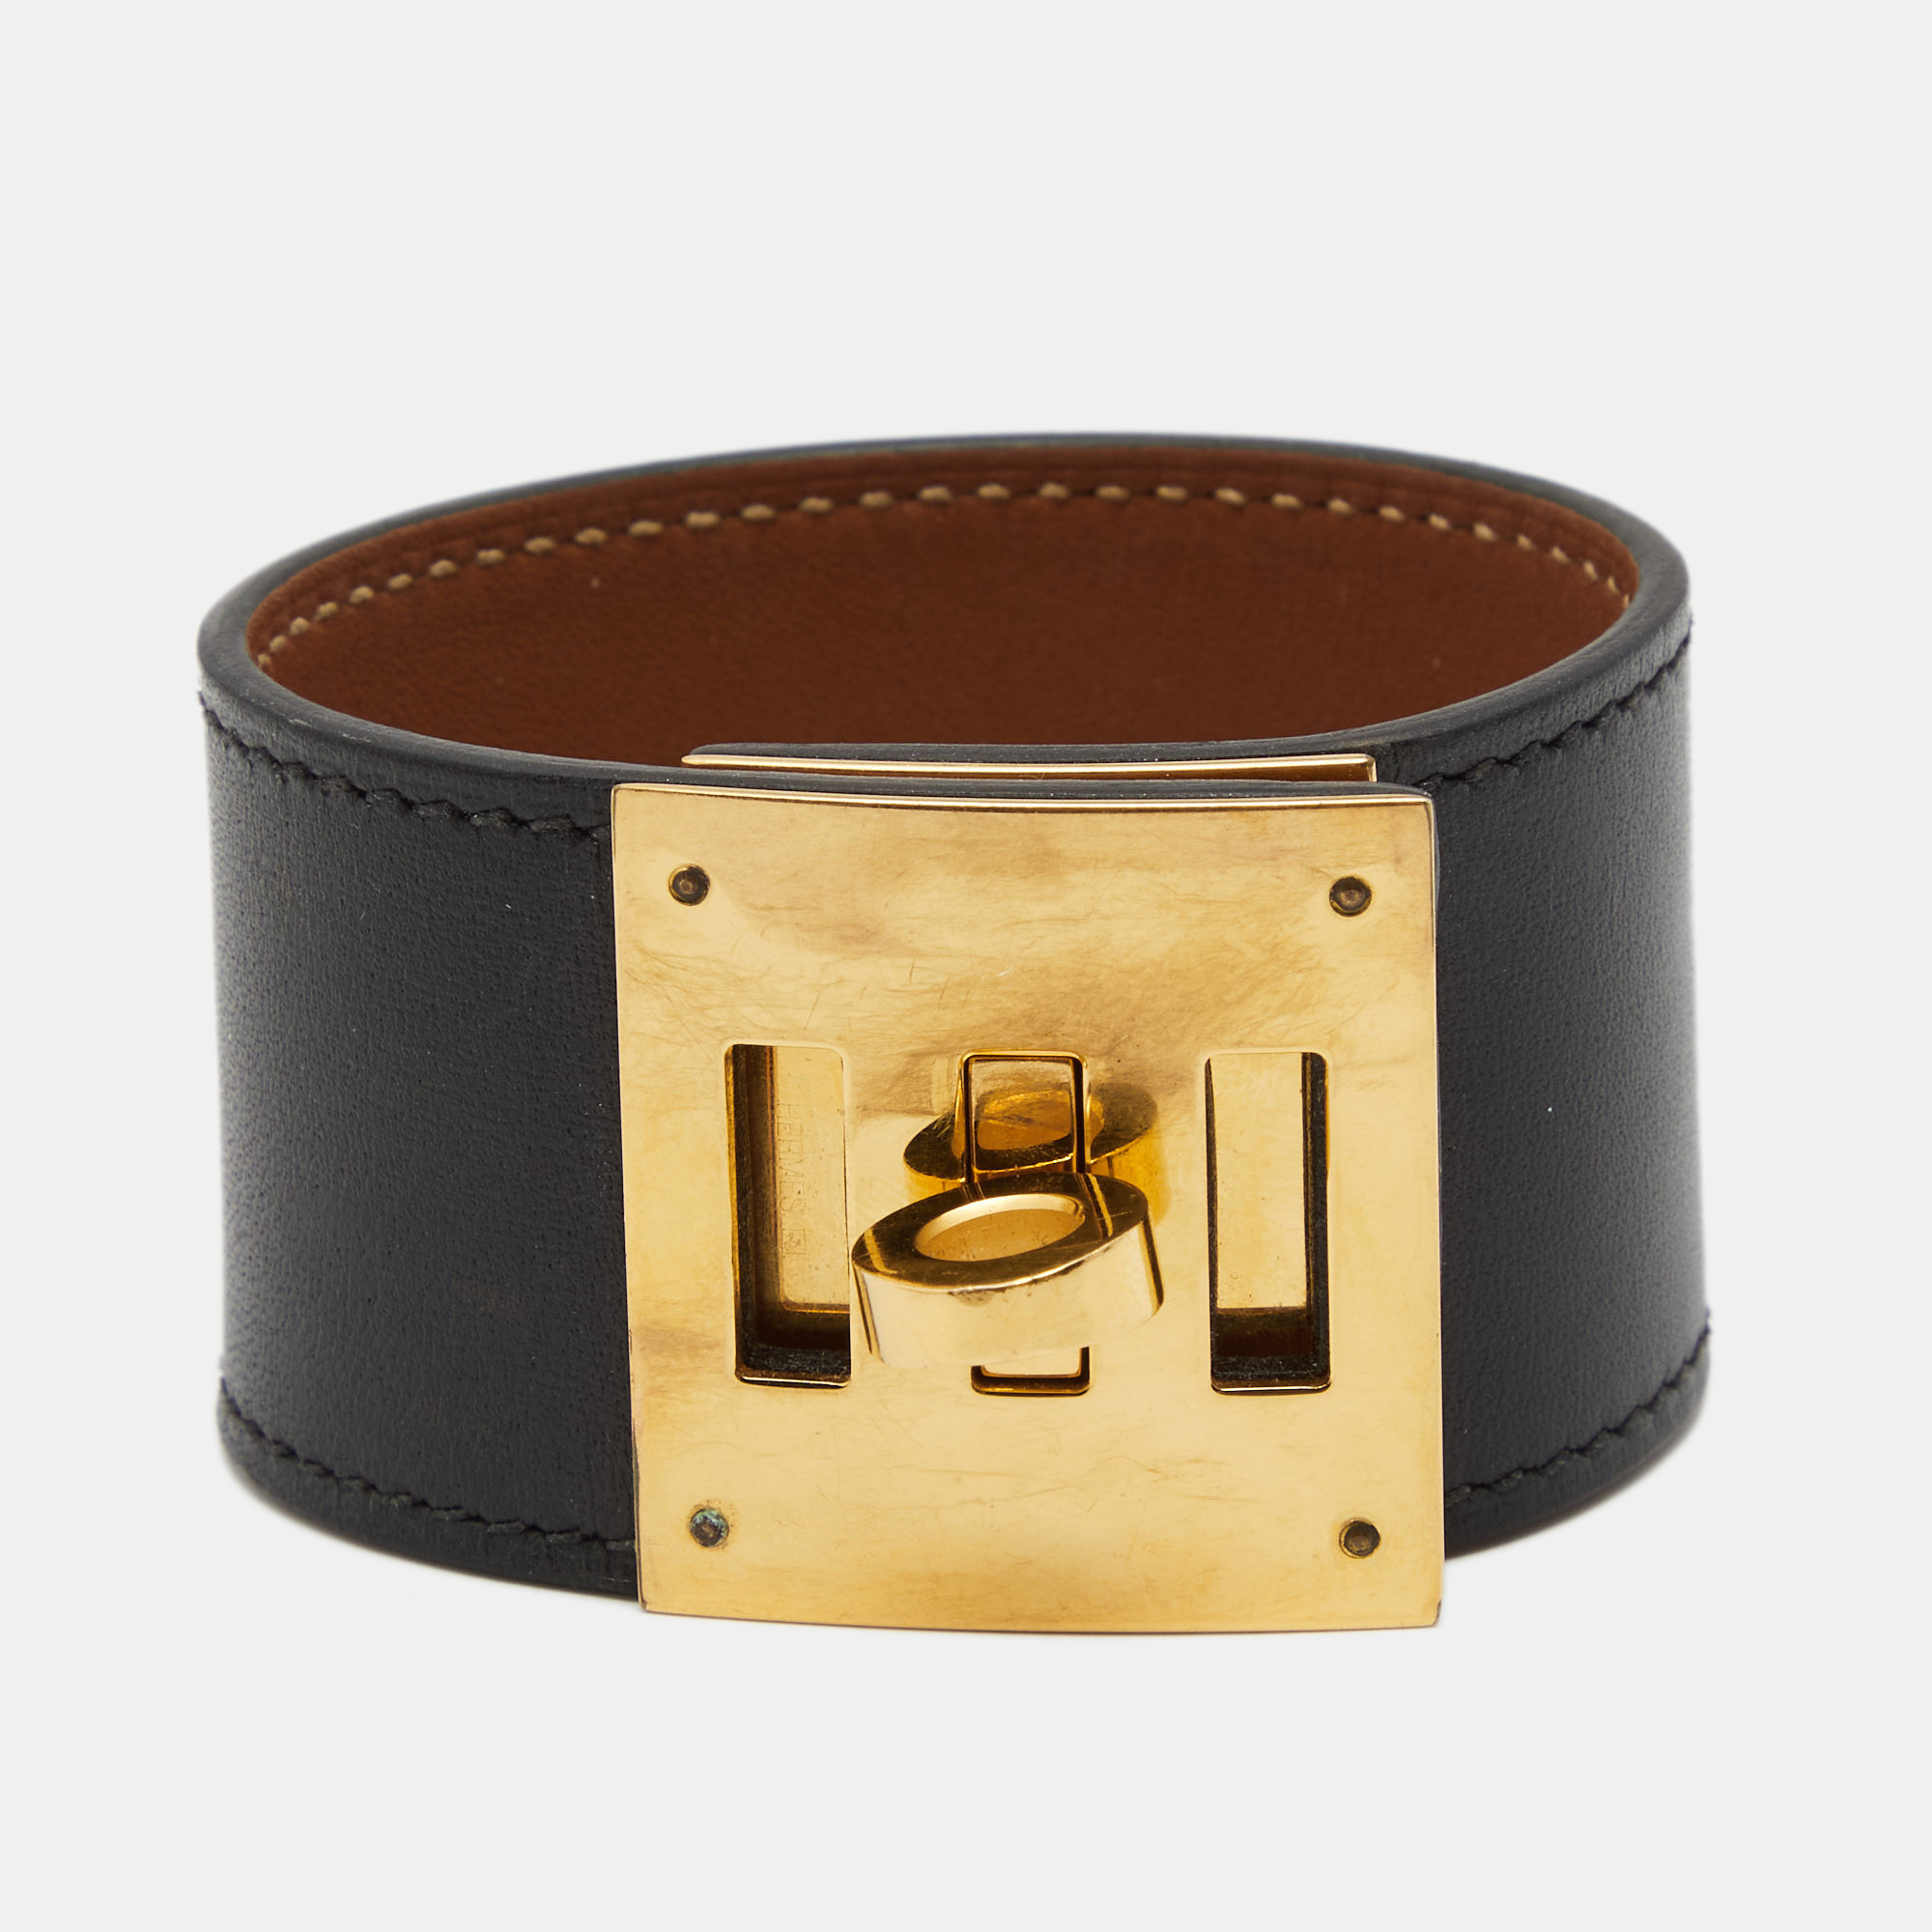 Hermes Black Swift Leather Gold Plated Kelly Dog Bracelet